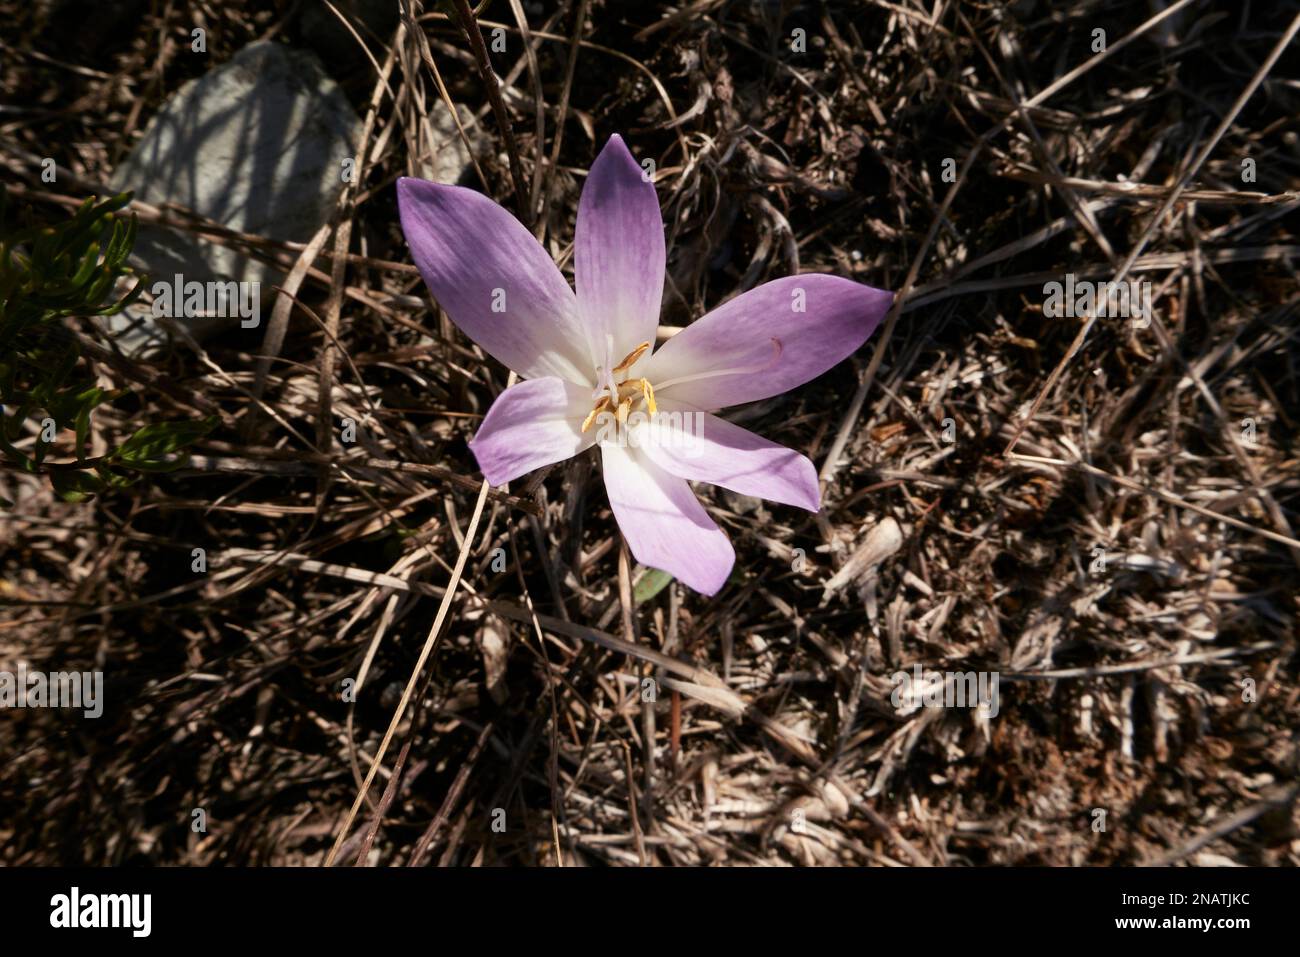 Colchium autunnale purple flower close up Stock Photo